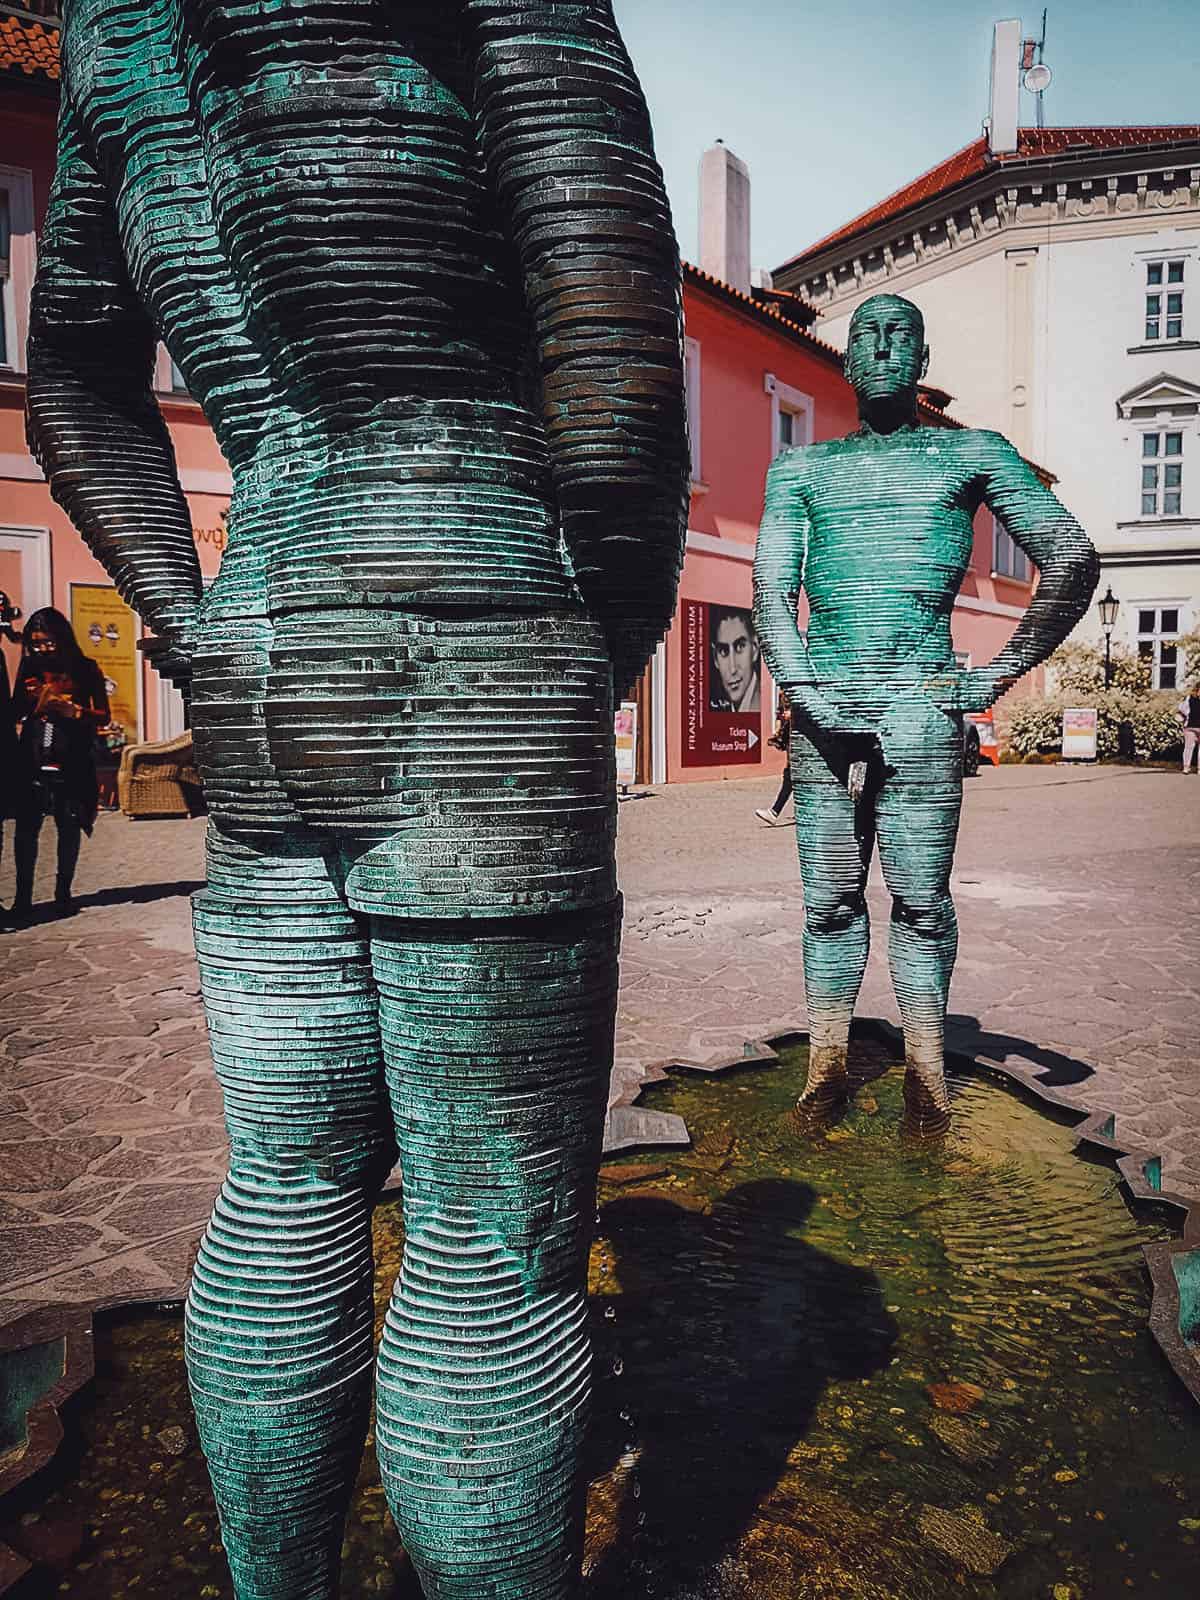 Peeing sculptures at Kafka's museum